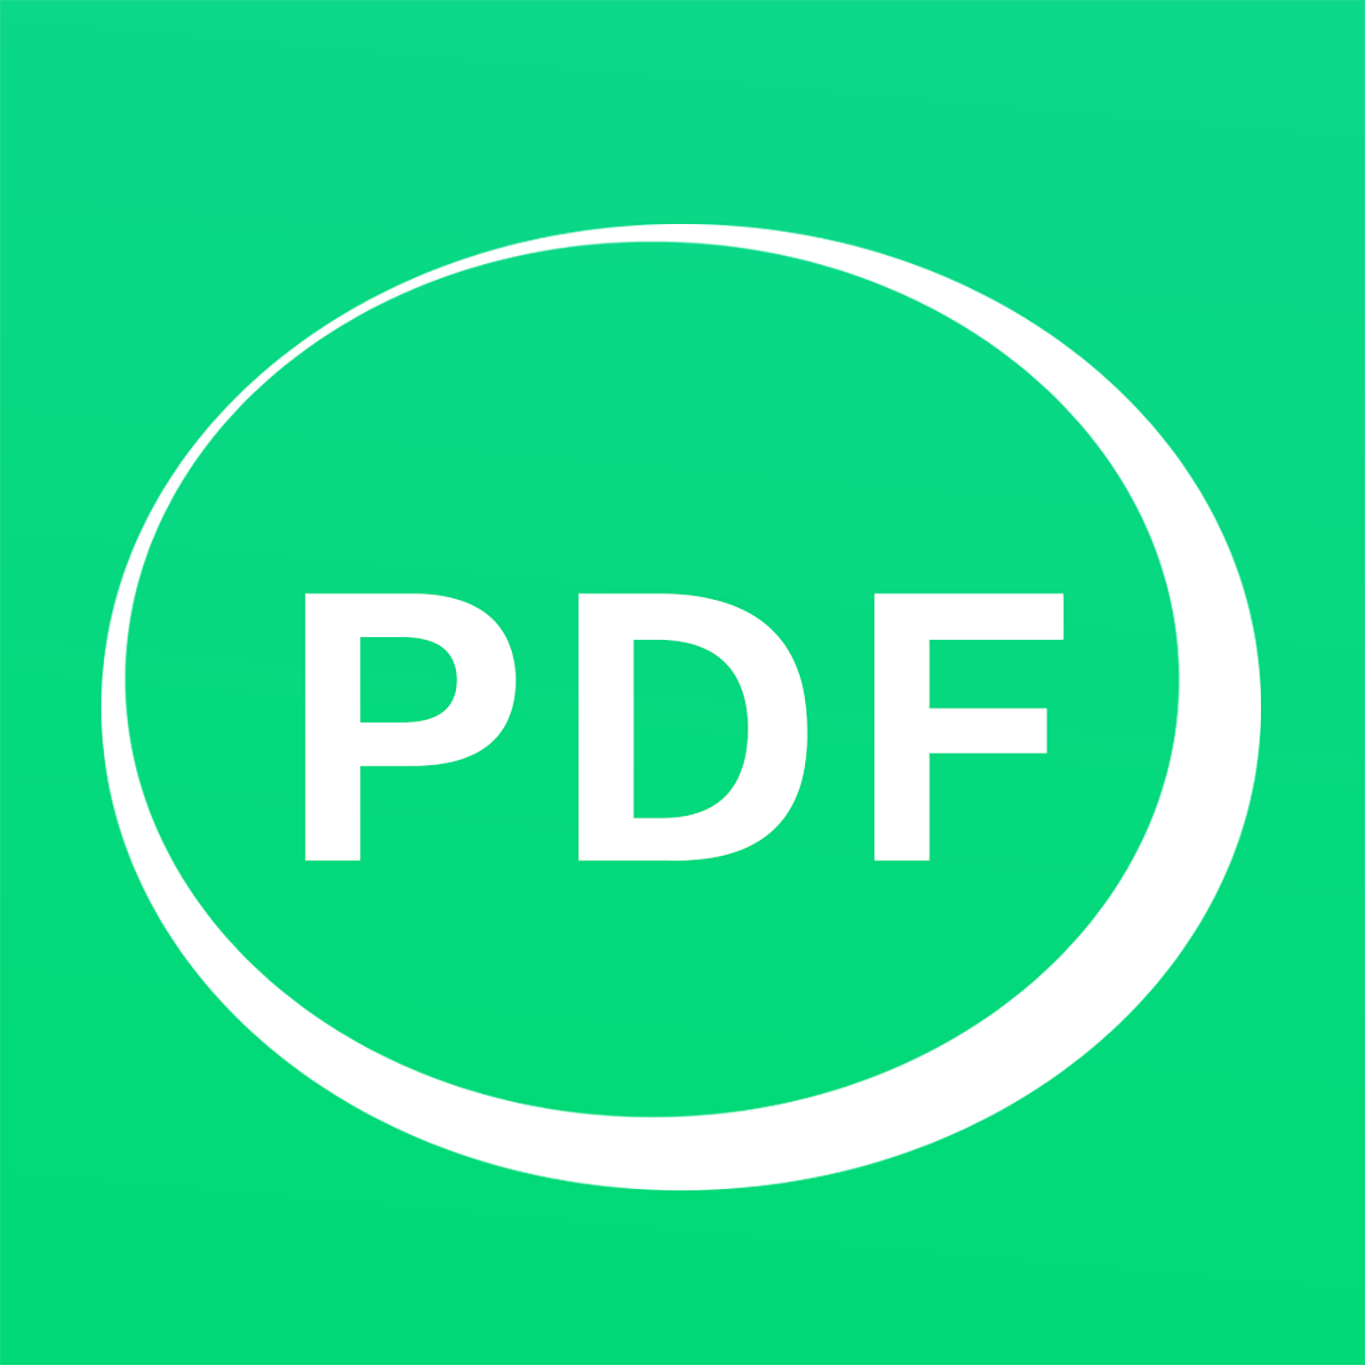 PDF转换器免费版